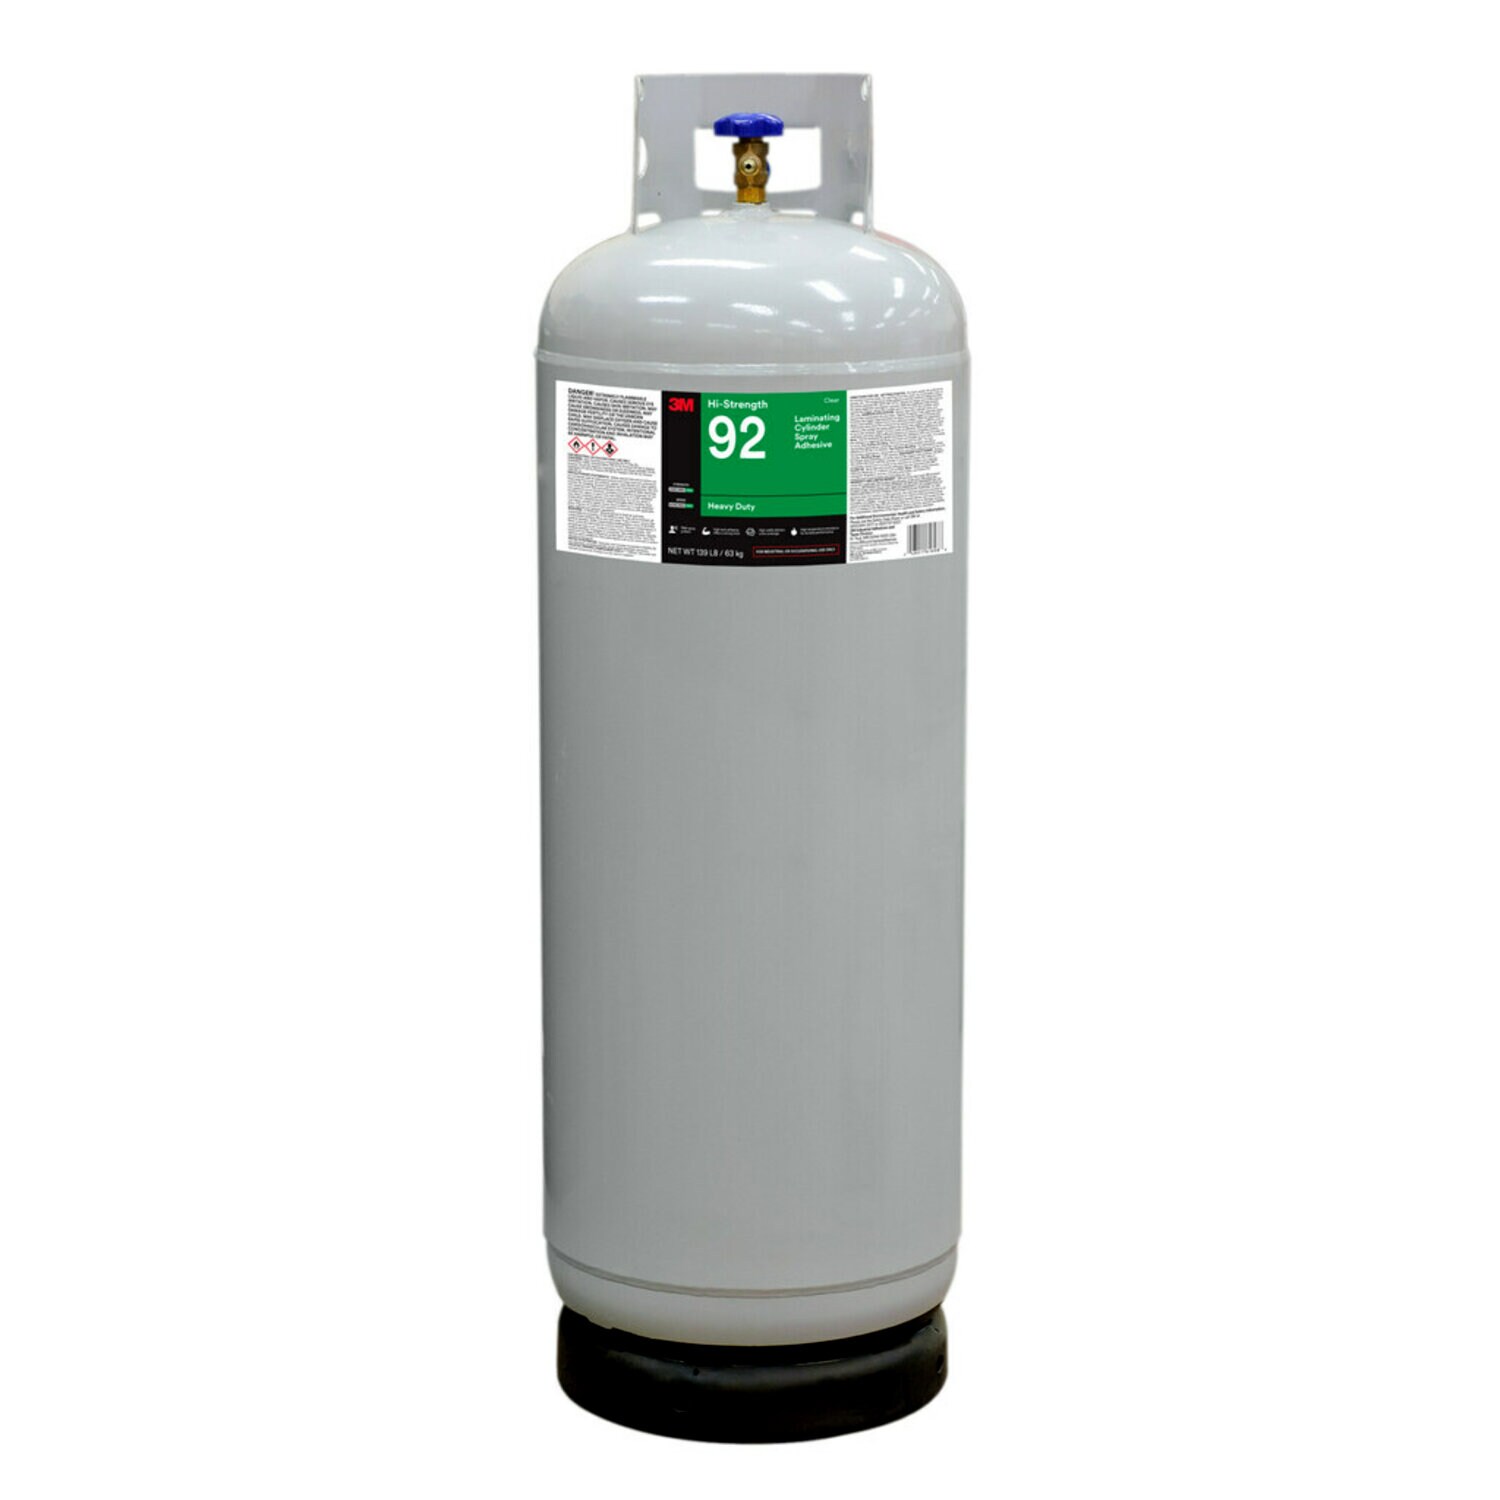 7100139493 - 3M Hi-Strength Laminating 92 Cylinder Spray Adhesive, Clear,
Intermediate Cylinder (Net Wt 139 lb)